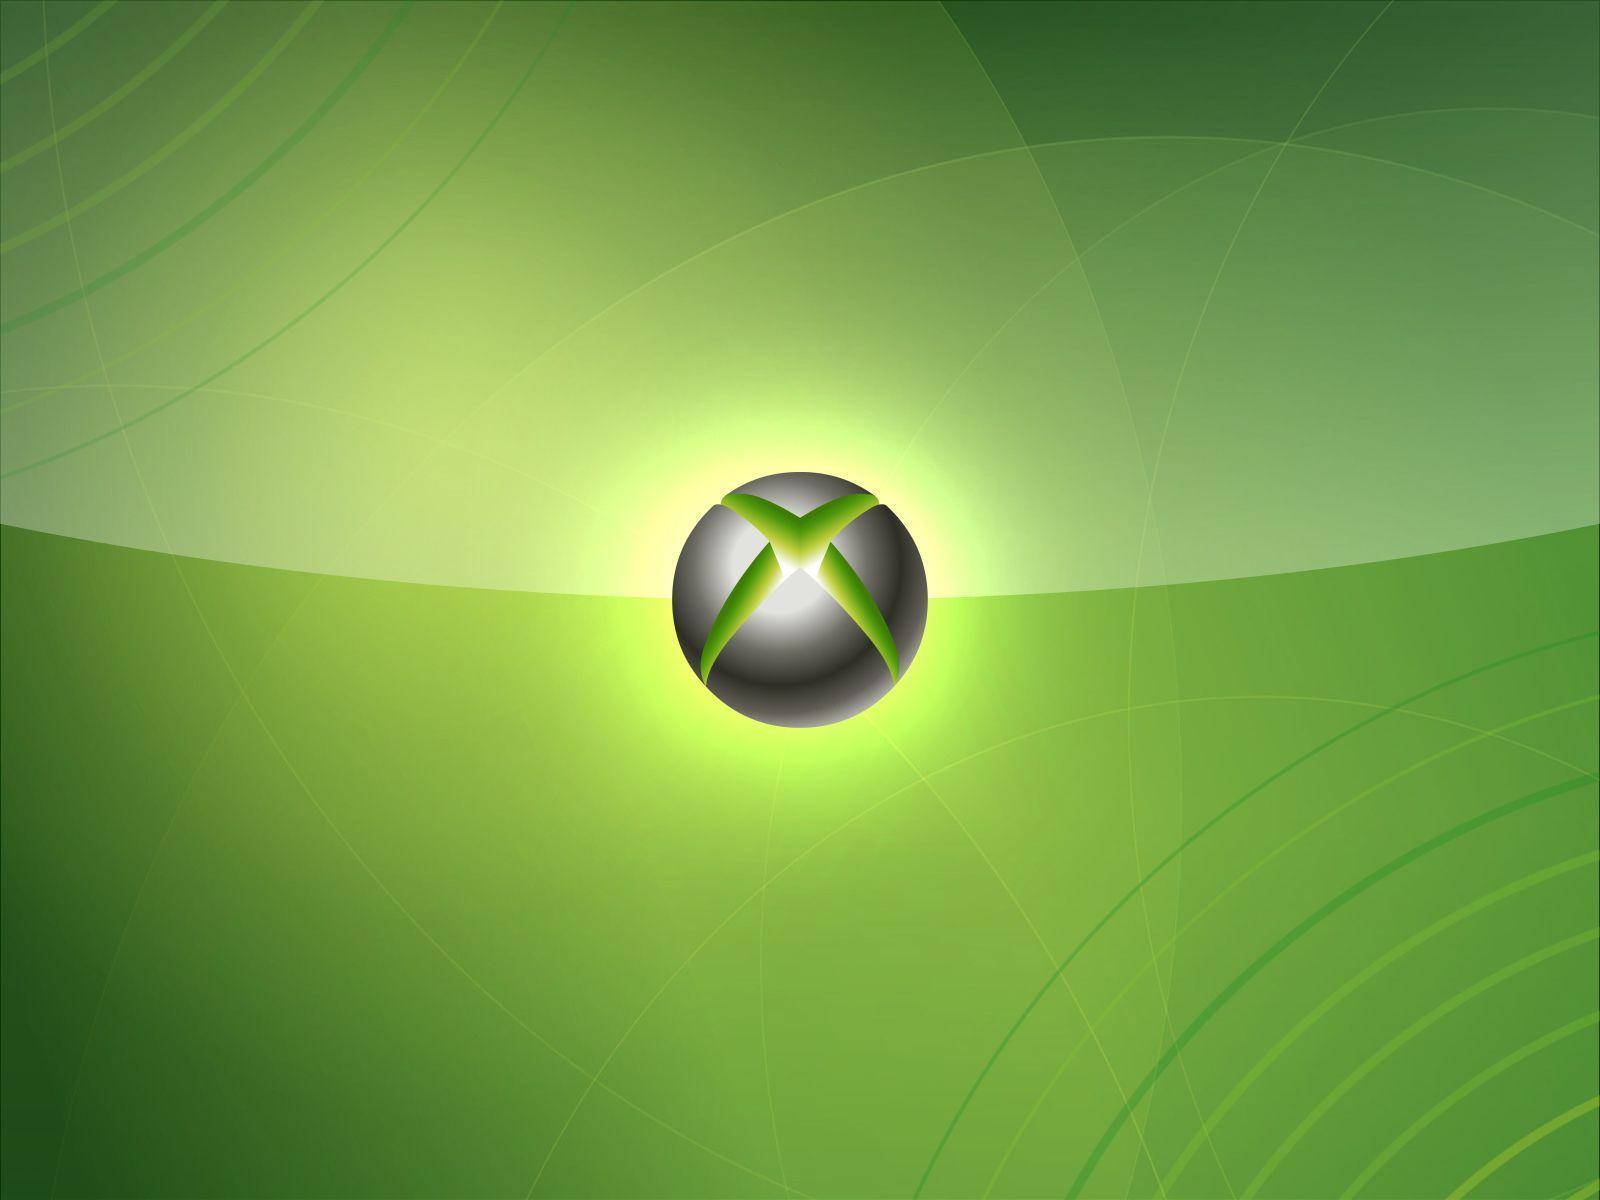 Xbox 360 Wallpaper 4009 1600x1200 px